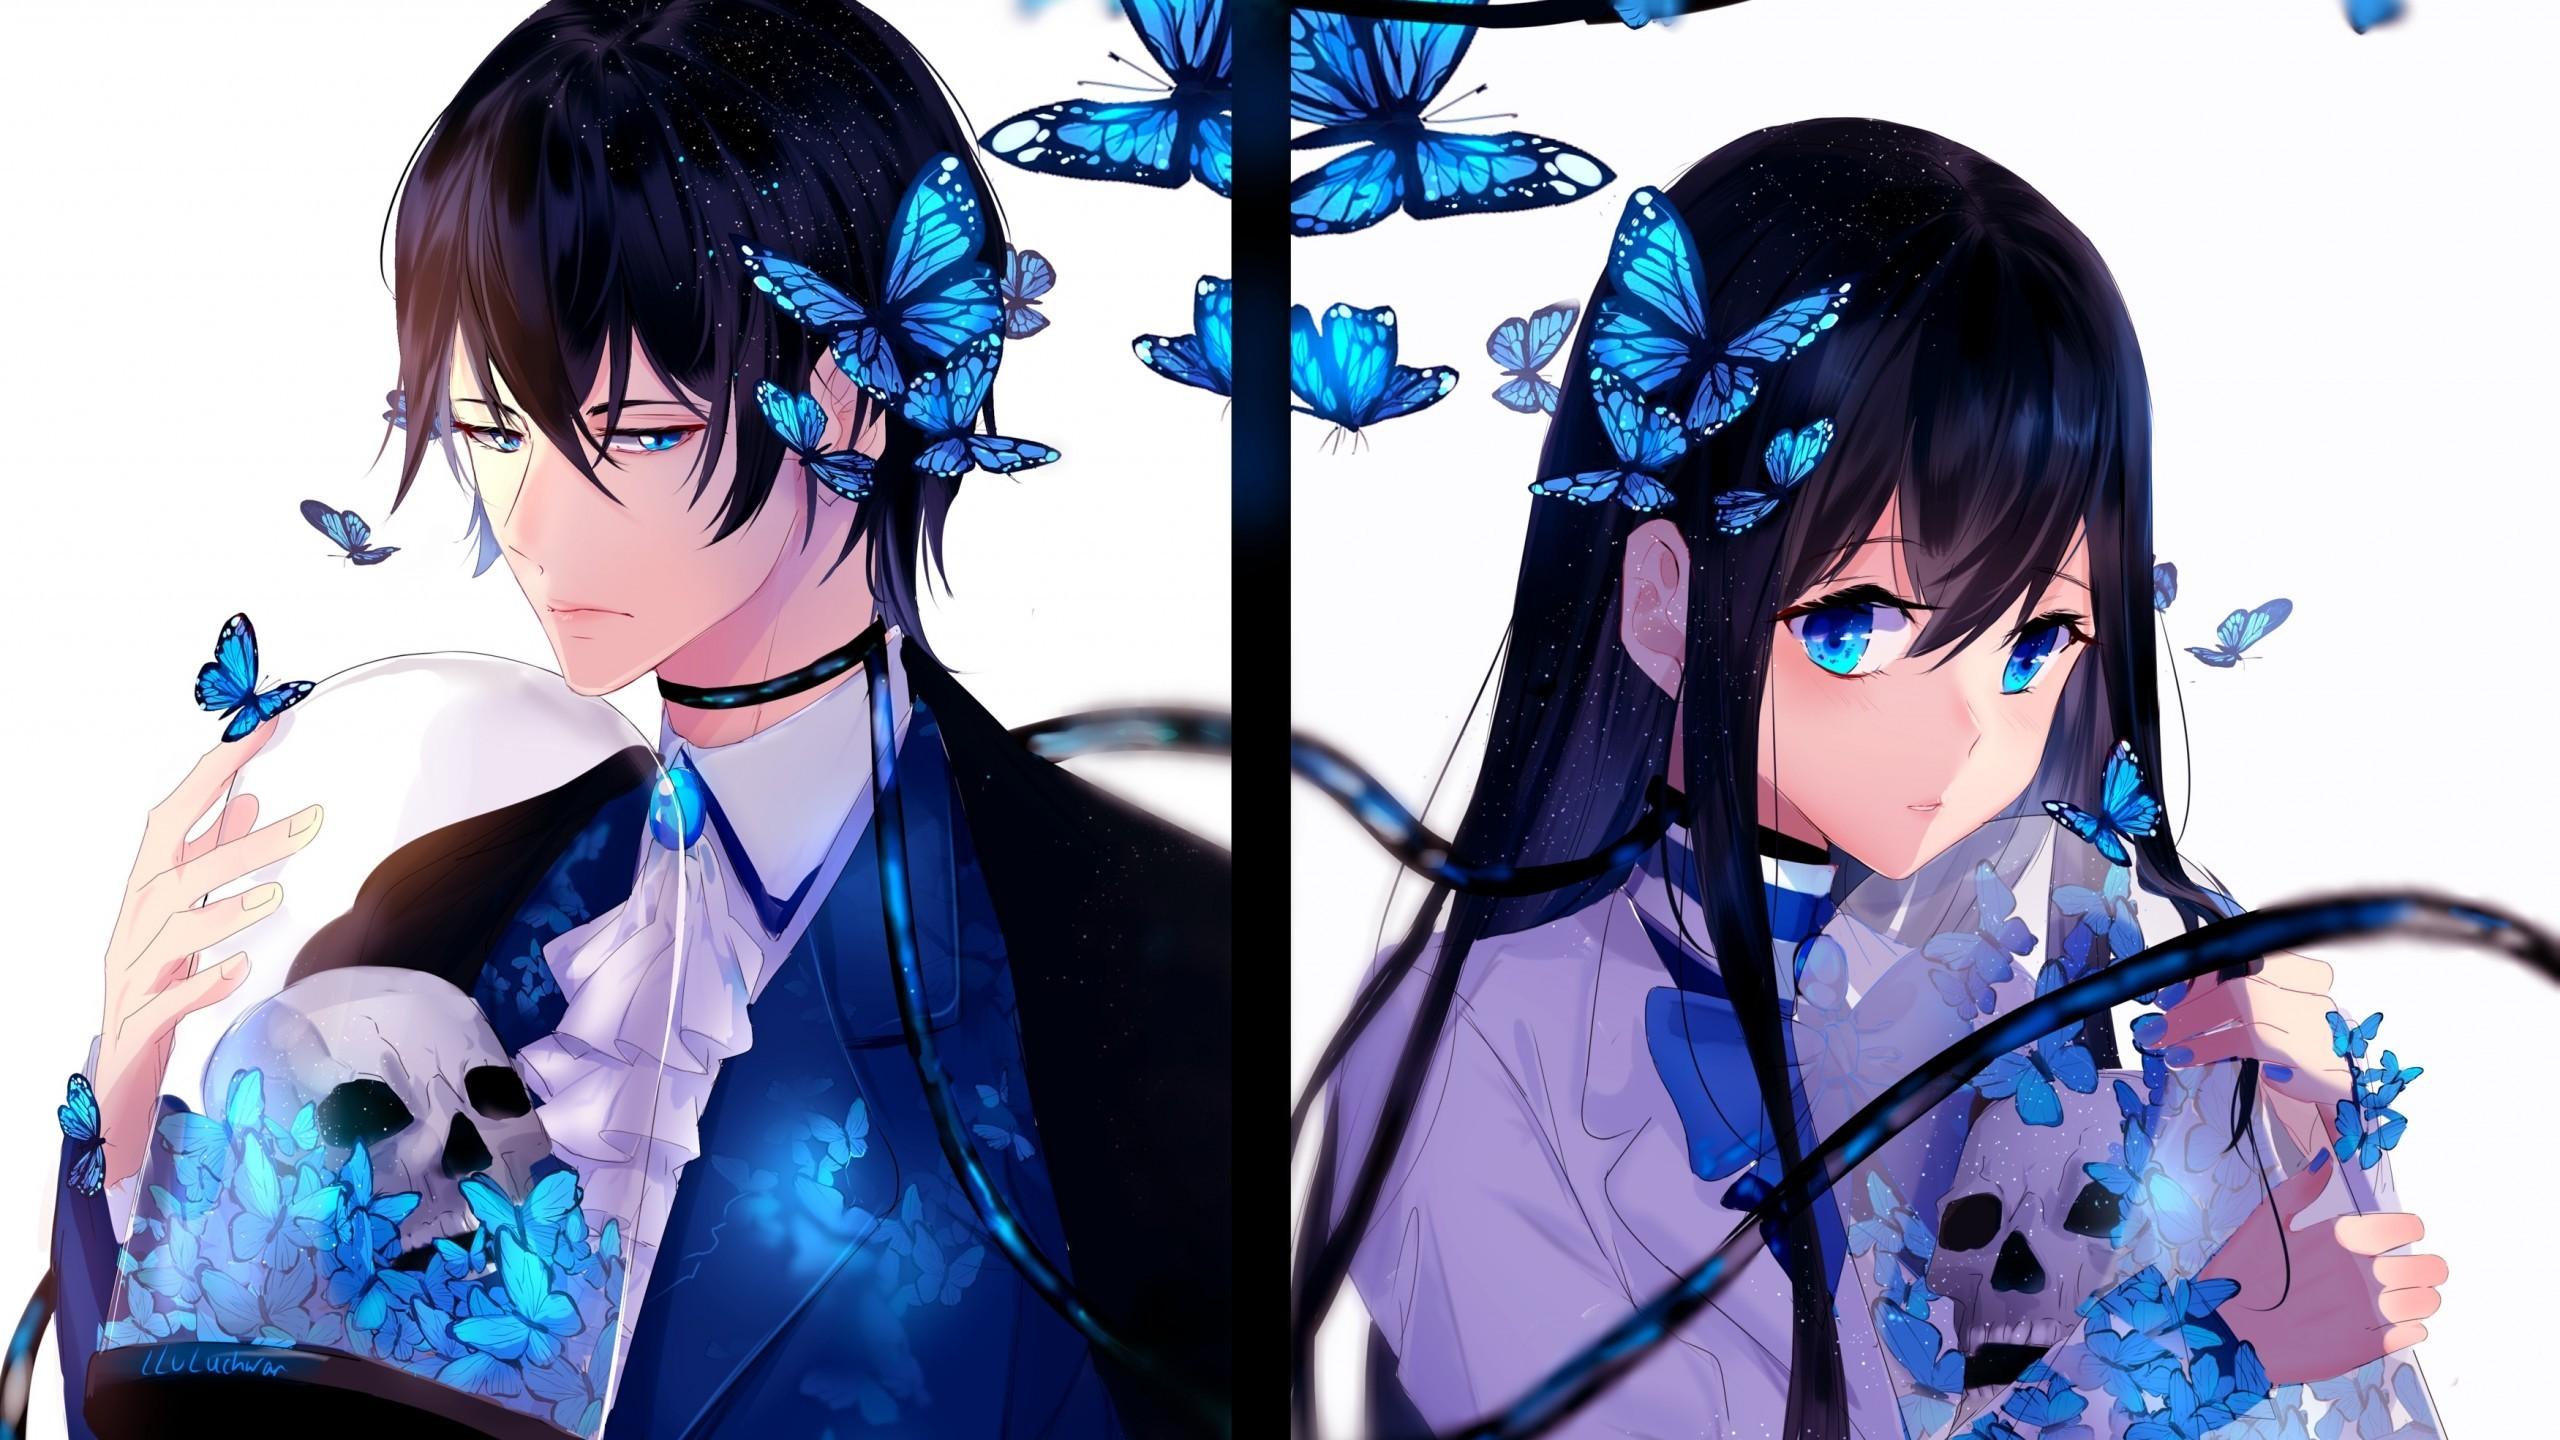 Romantic Anime Couple Wallpapers - Top Free Romantic Anime Couple ...